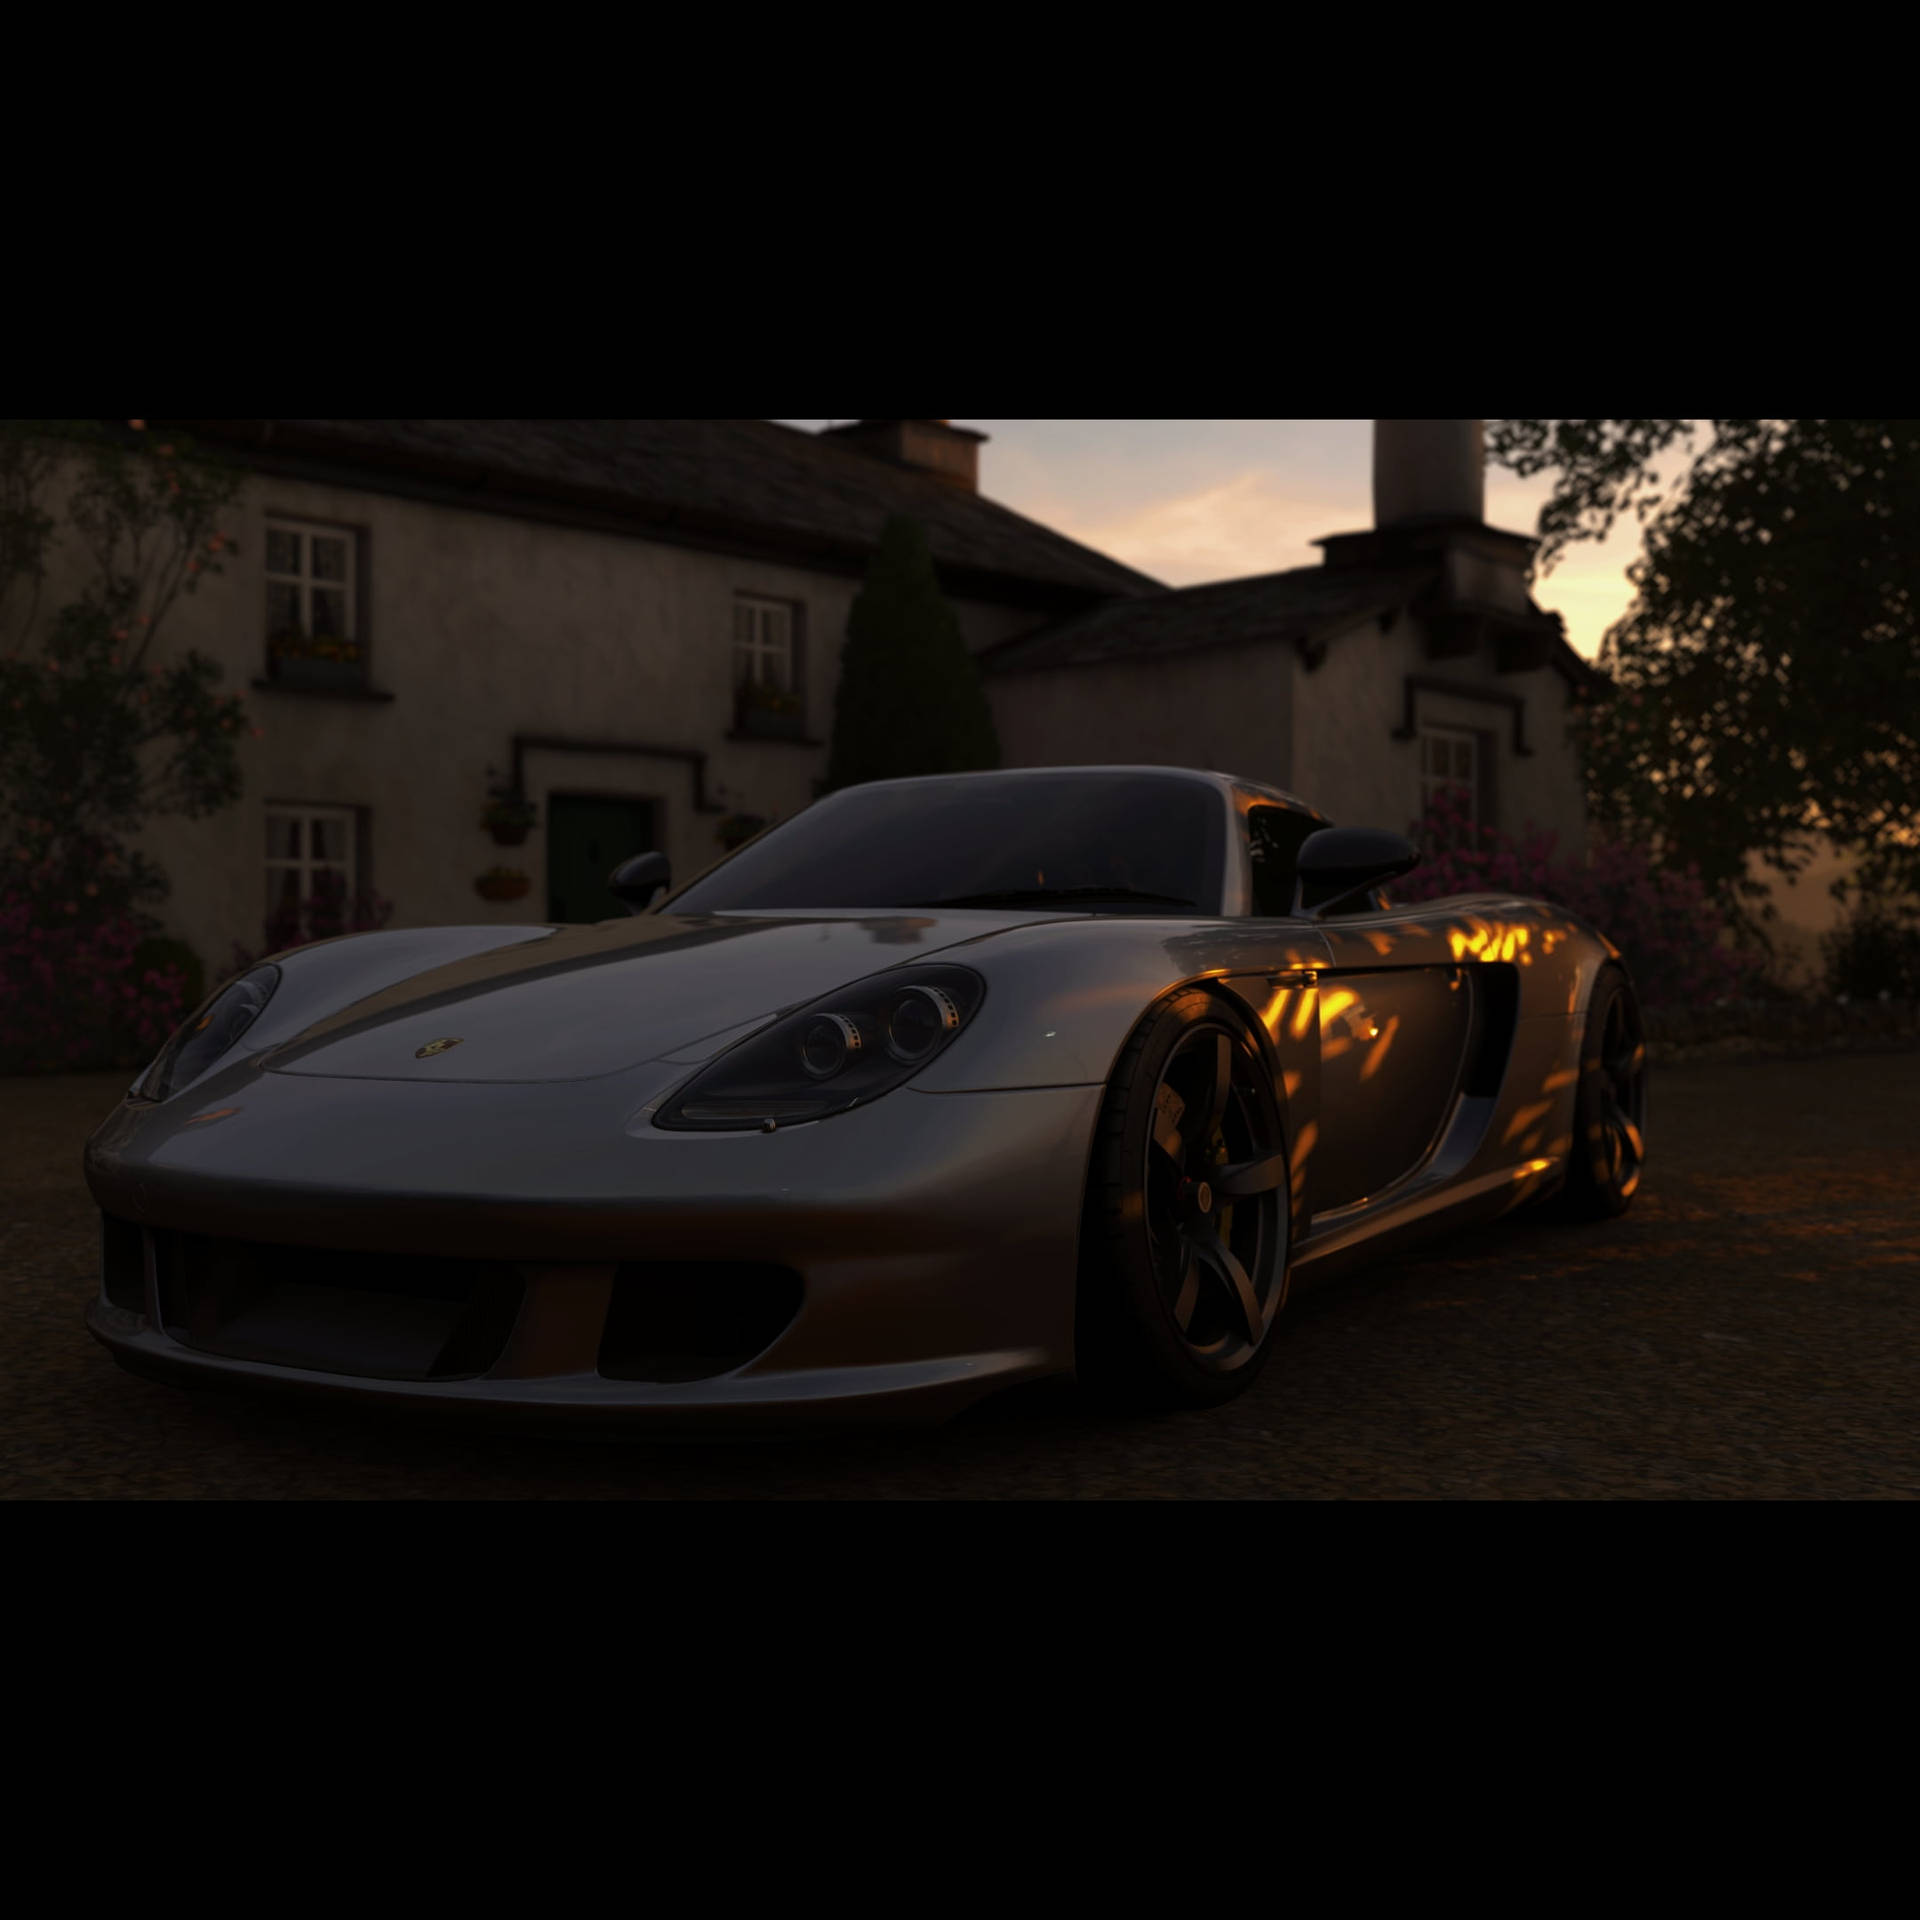 Exhilarating Speed - Porsche Carrera Gt In Forza Horizon 4